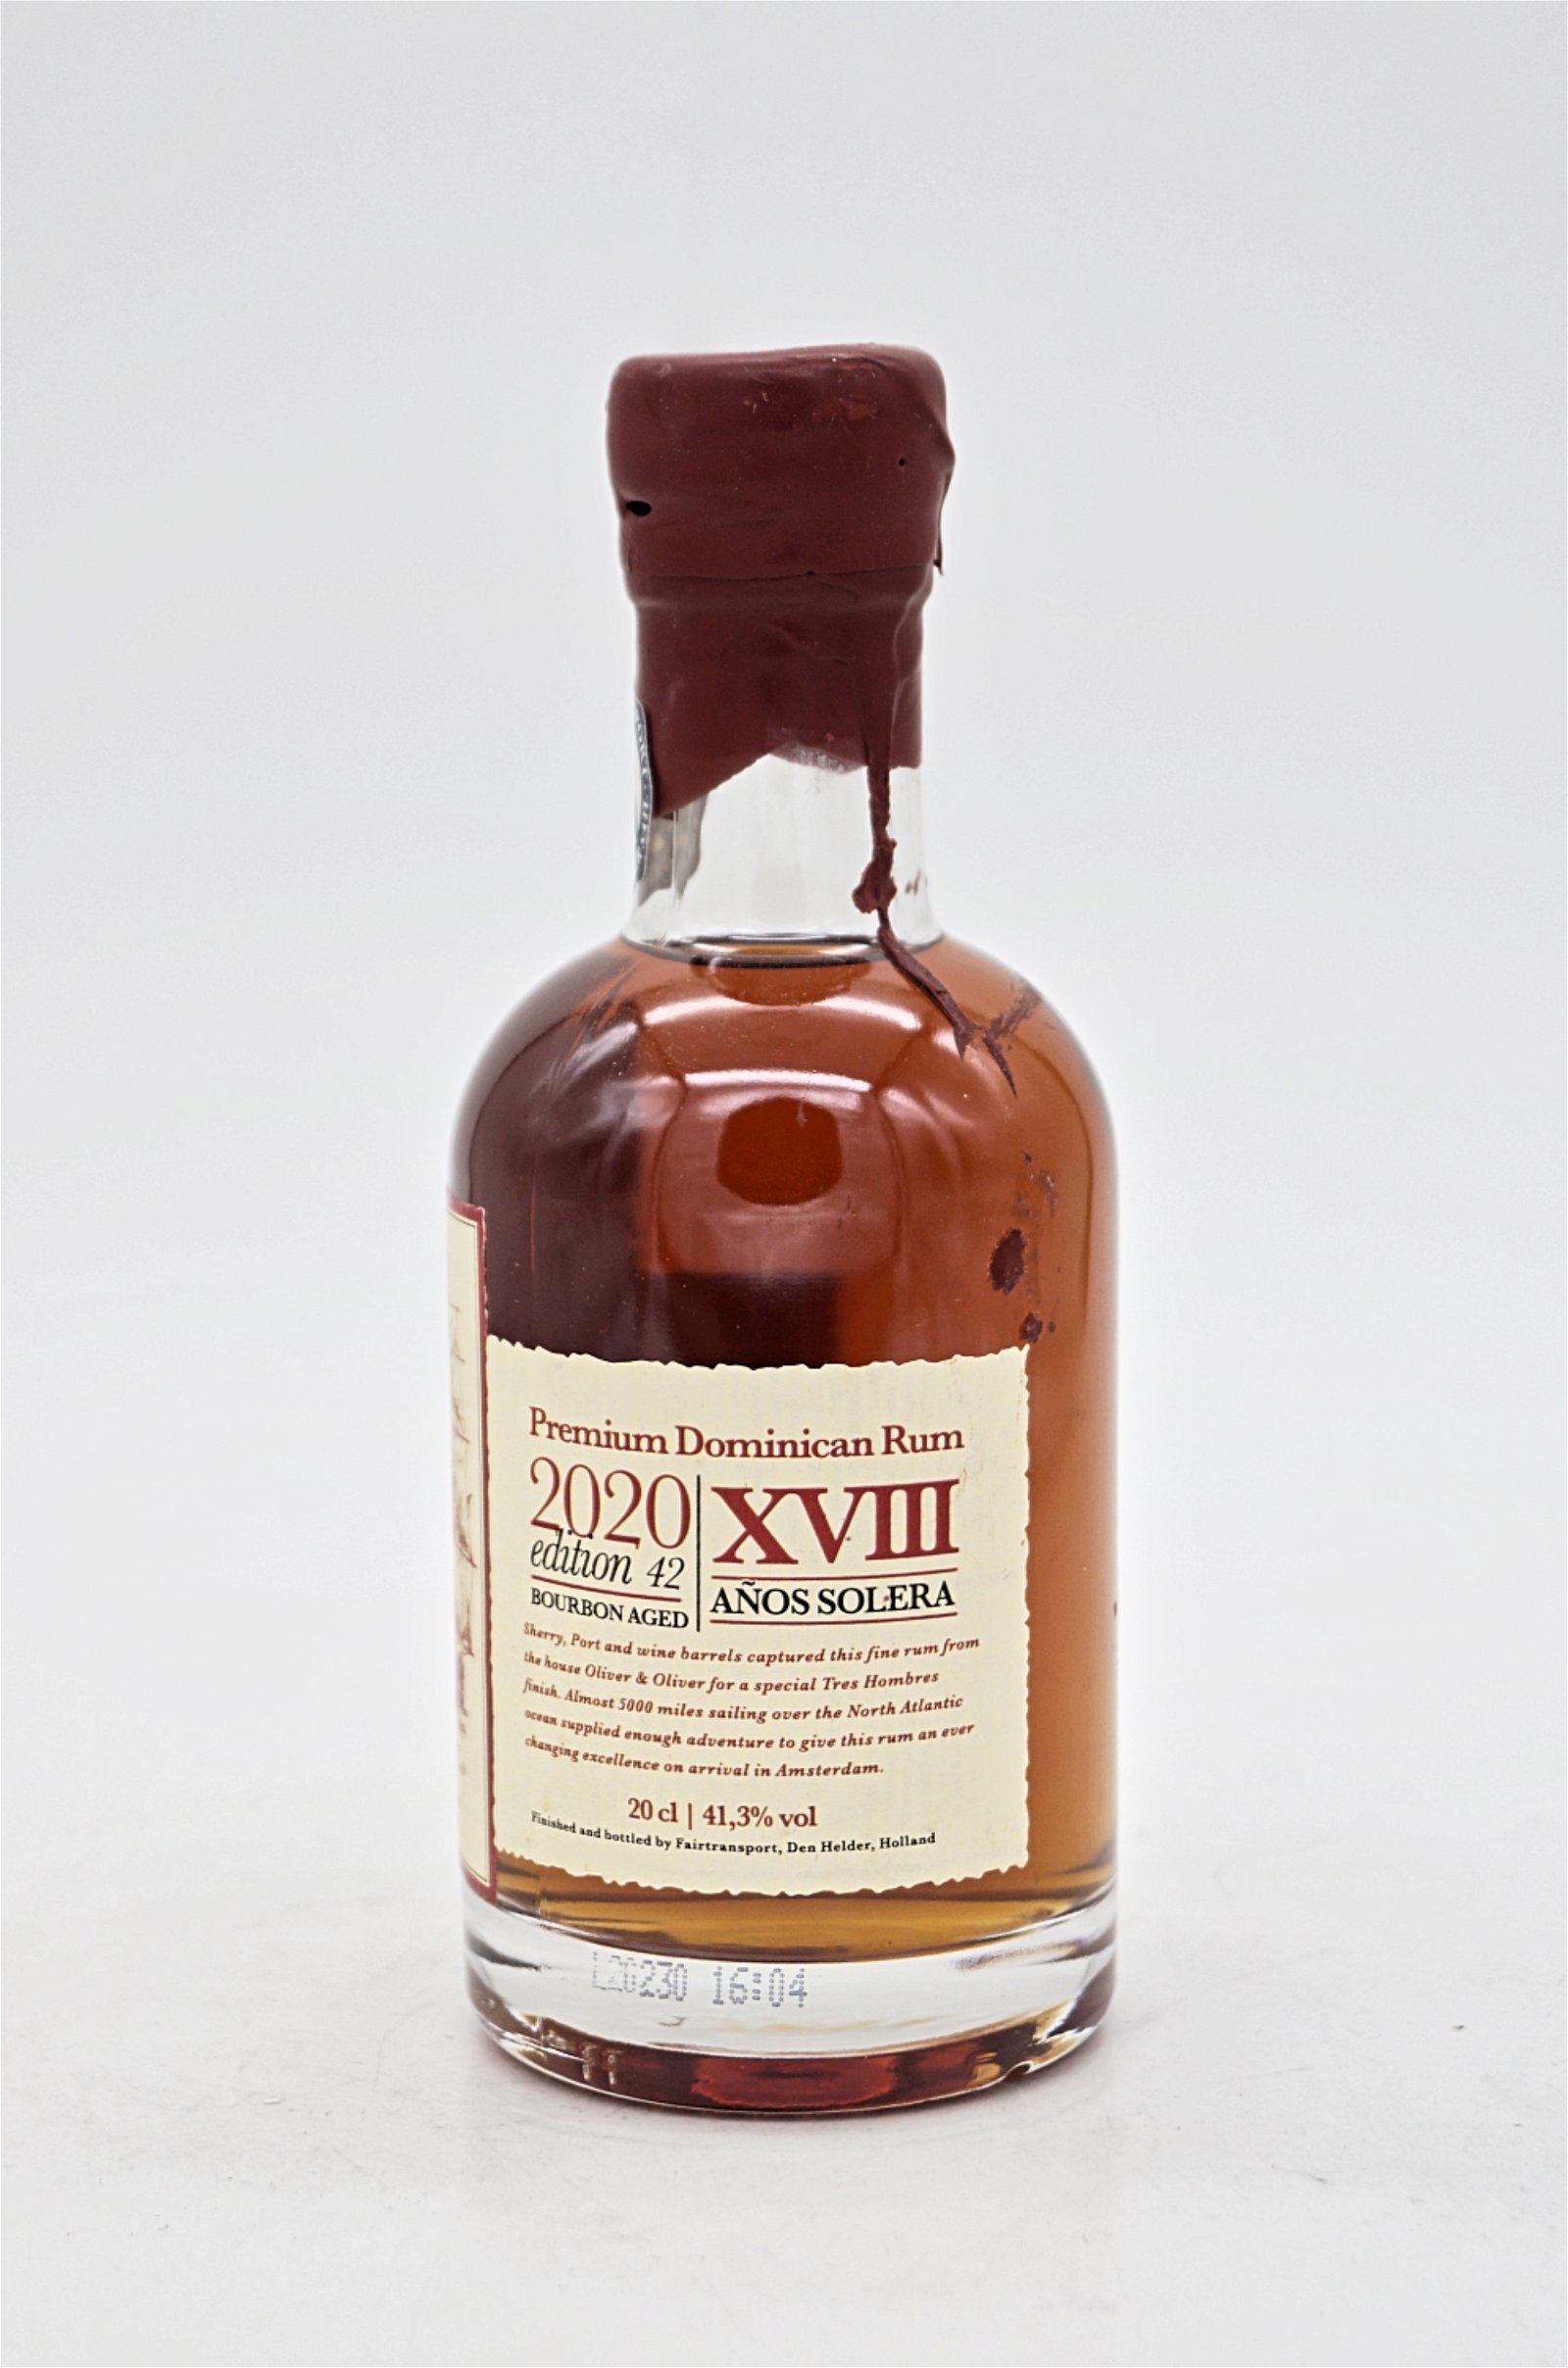 Tres Hombres XVIII Jahre 2020 Edition 42 Premium Dominican Rum 20 cl 